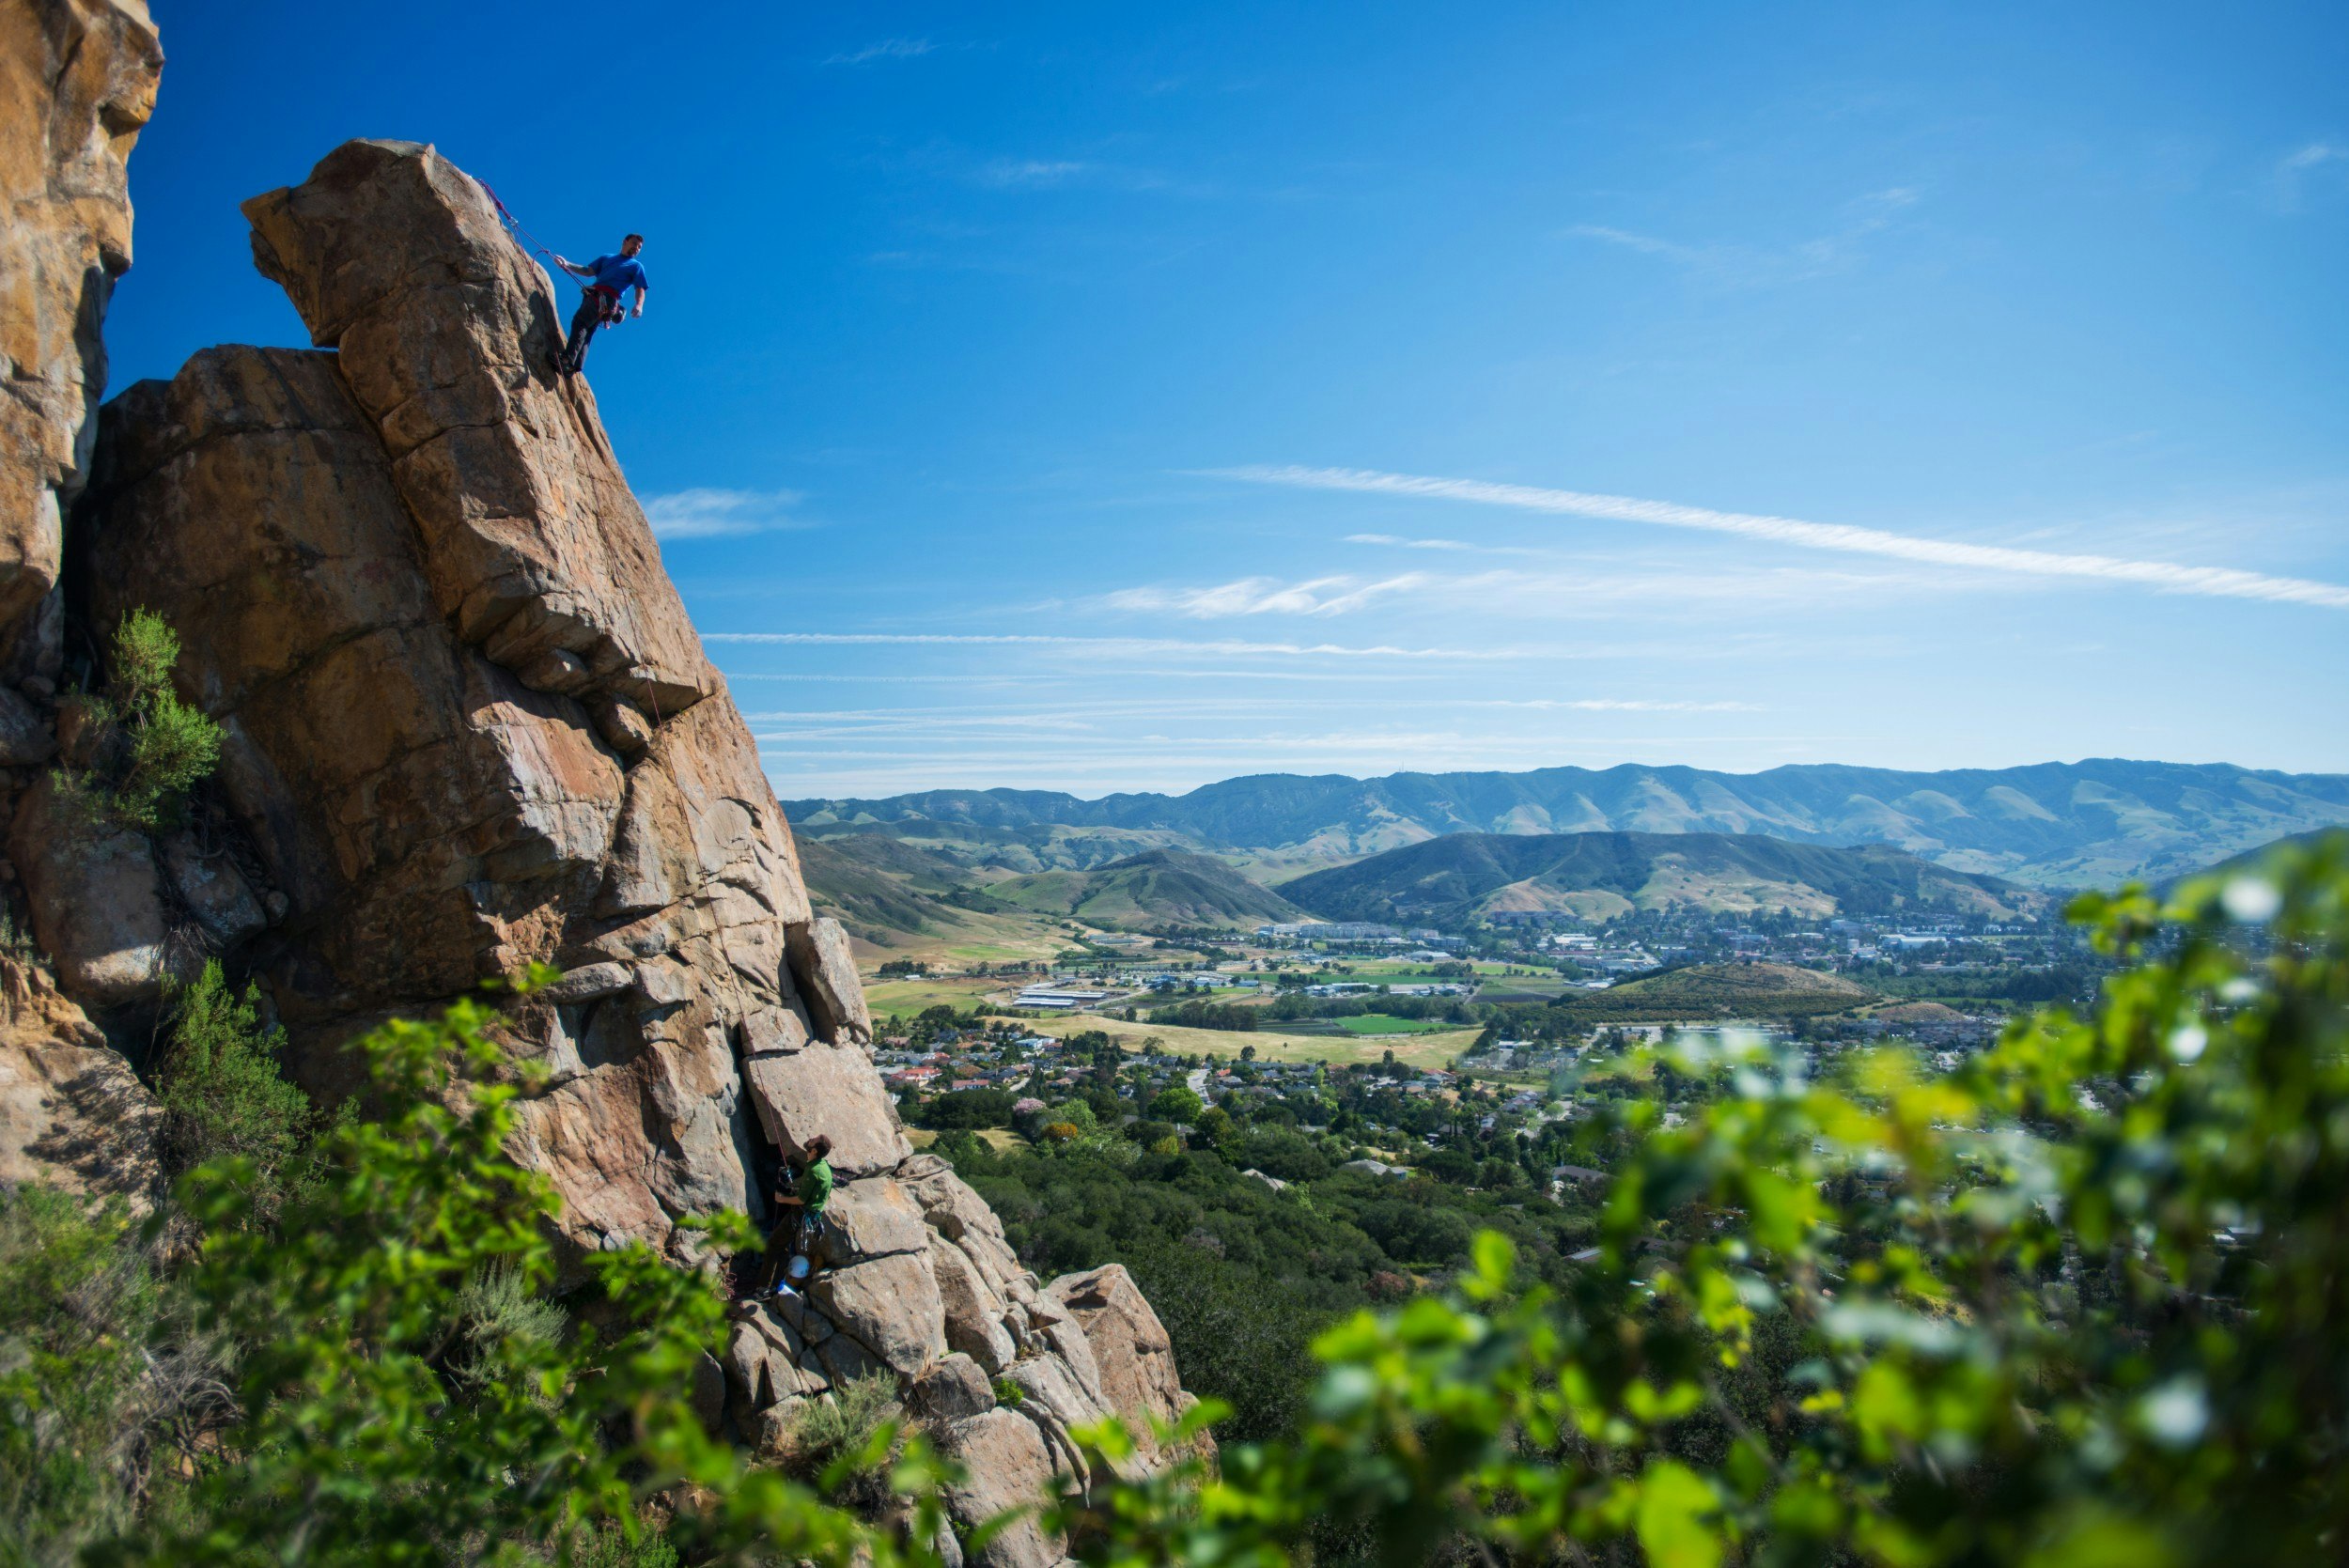 A man rock climbing in San Luis Obispo